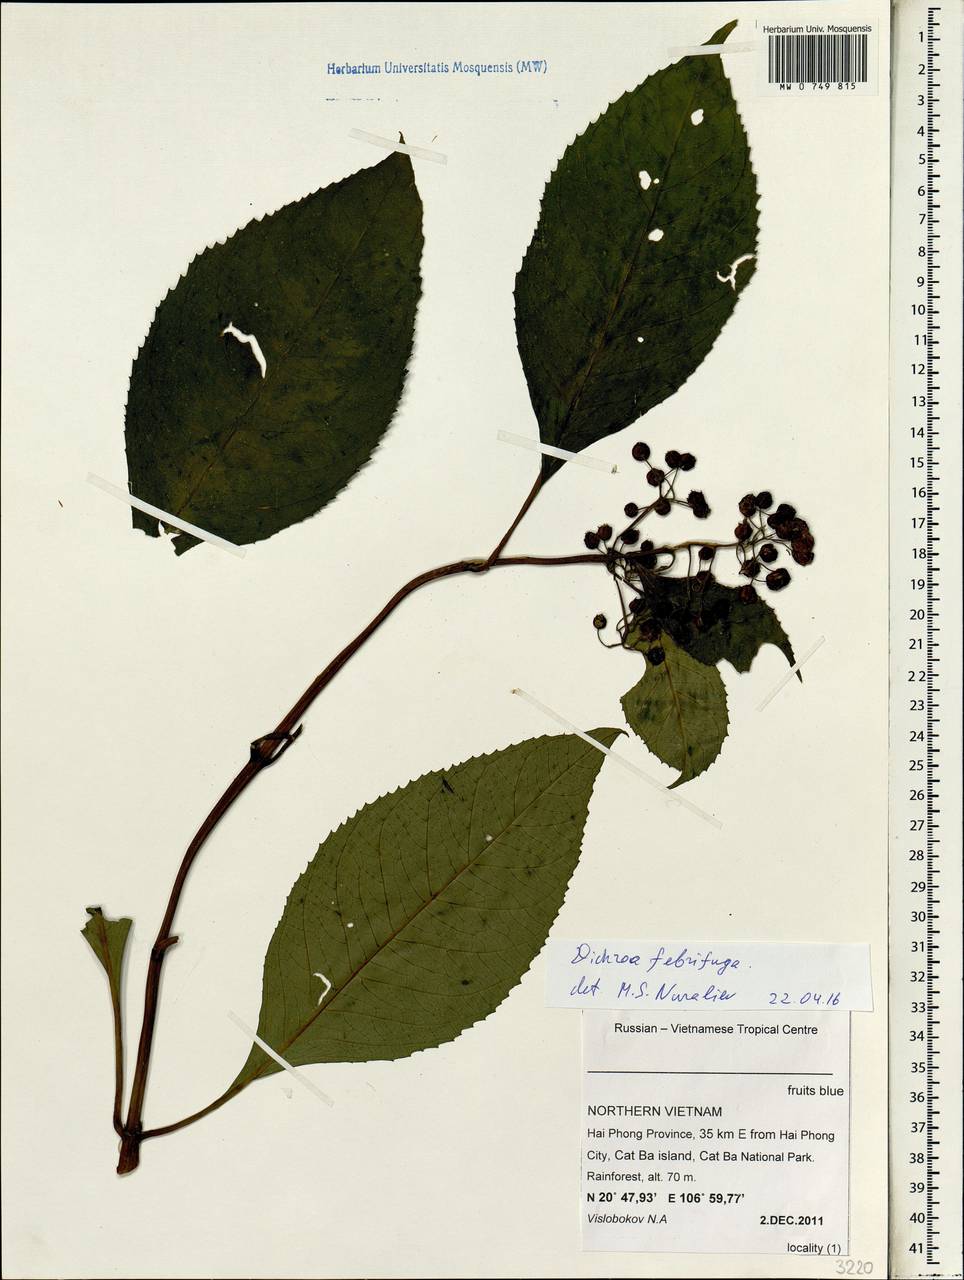 Hydrangea febrifuga (Lour.) Y. De Smet & C. Granados, South Asia, South Asia (Asia outside ex-Soviet states and Mongolia) (ASIA) (Vietnam)